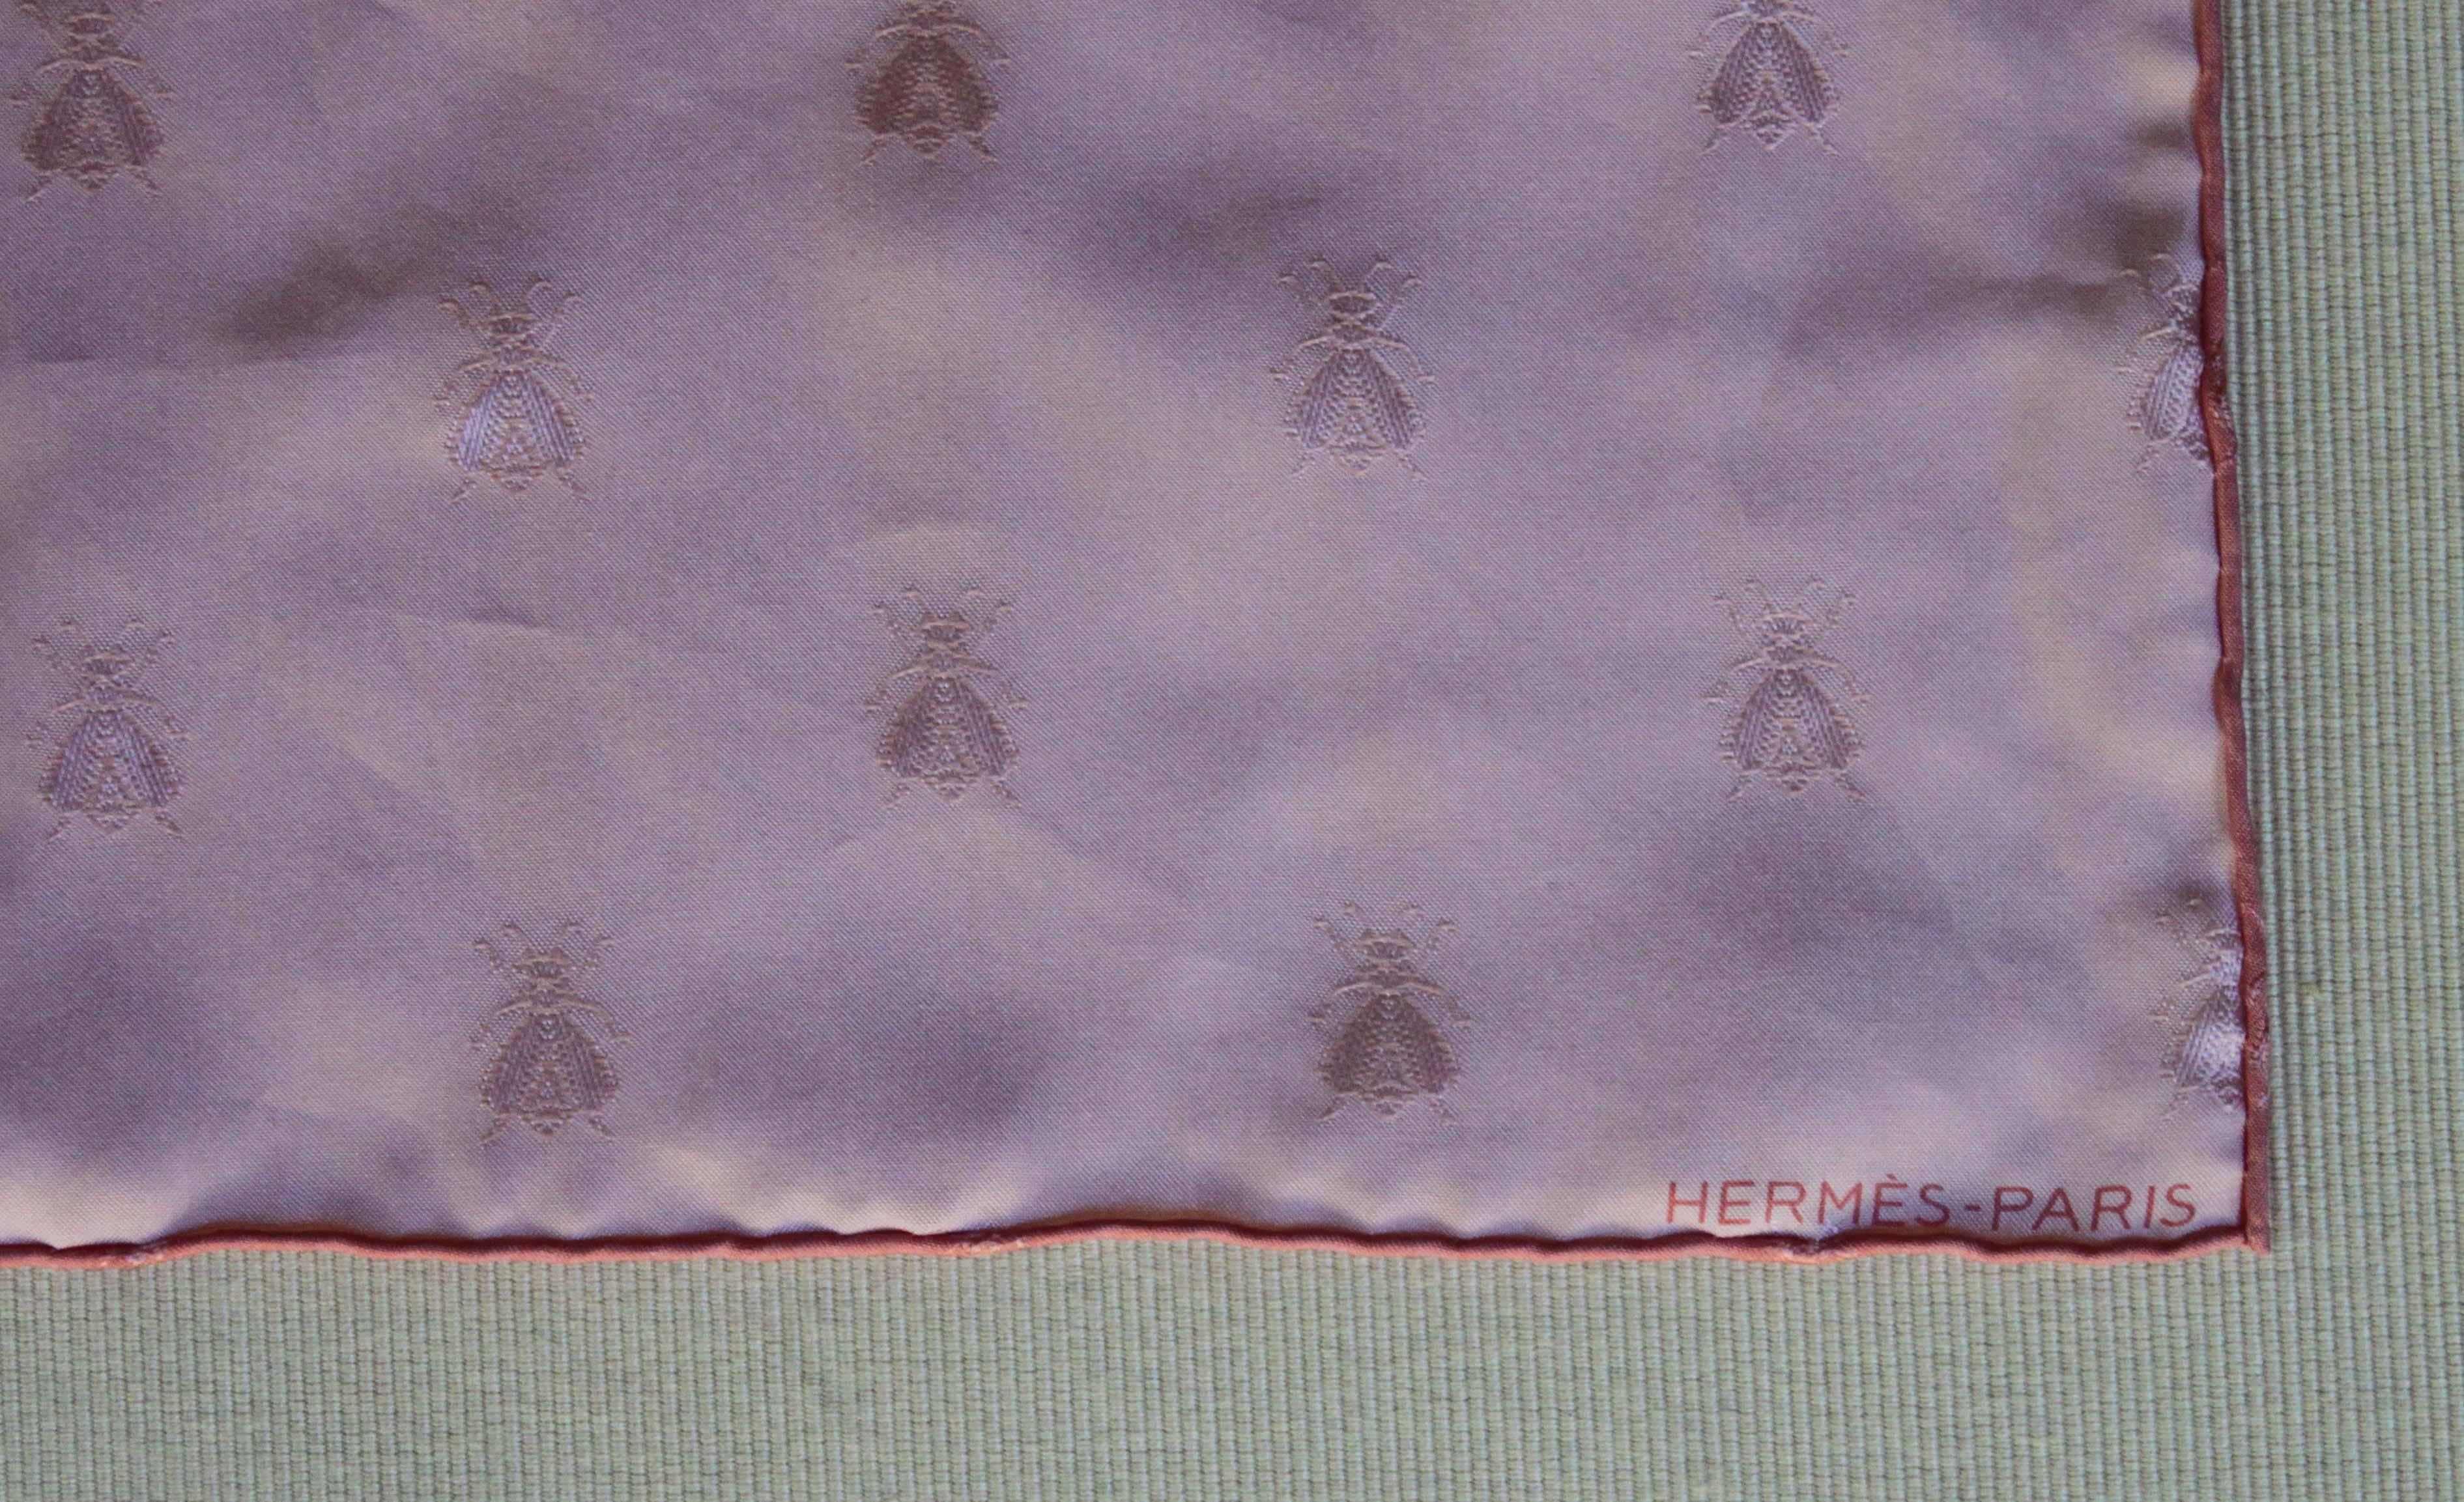 A pink silk scarf by Hermès with 